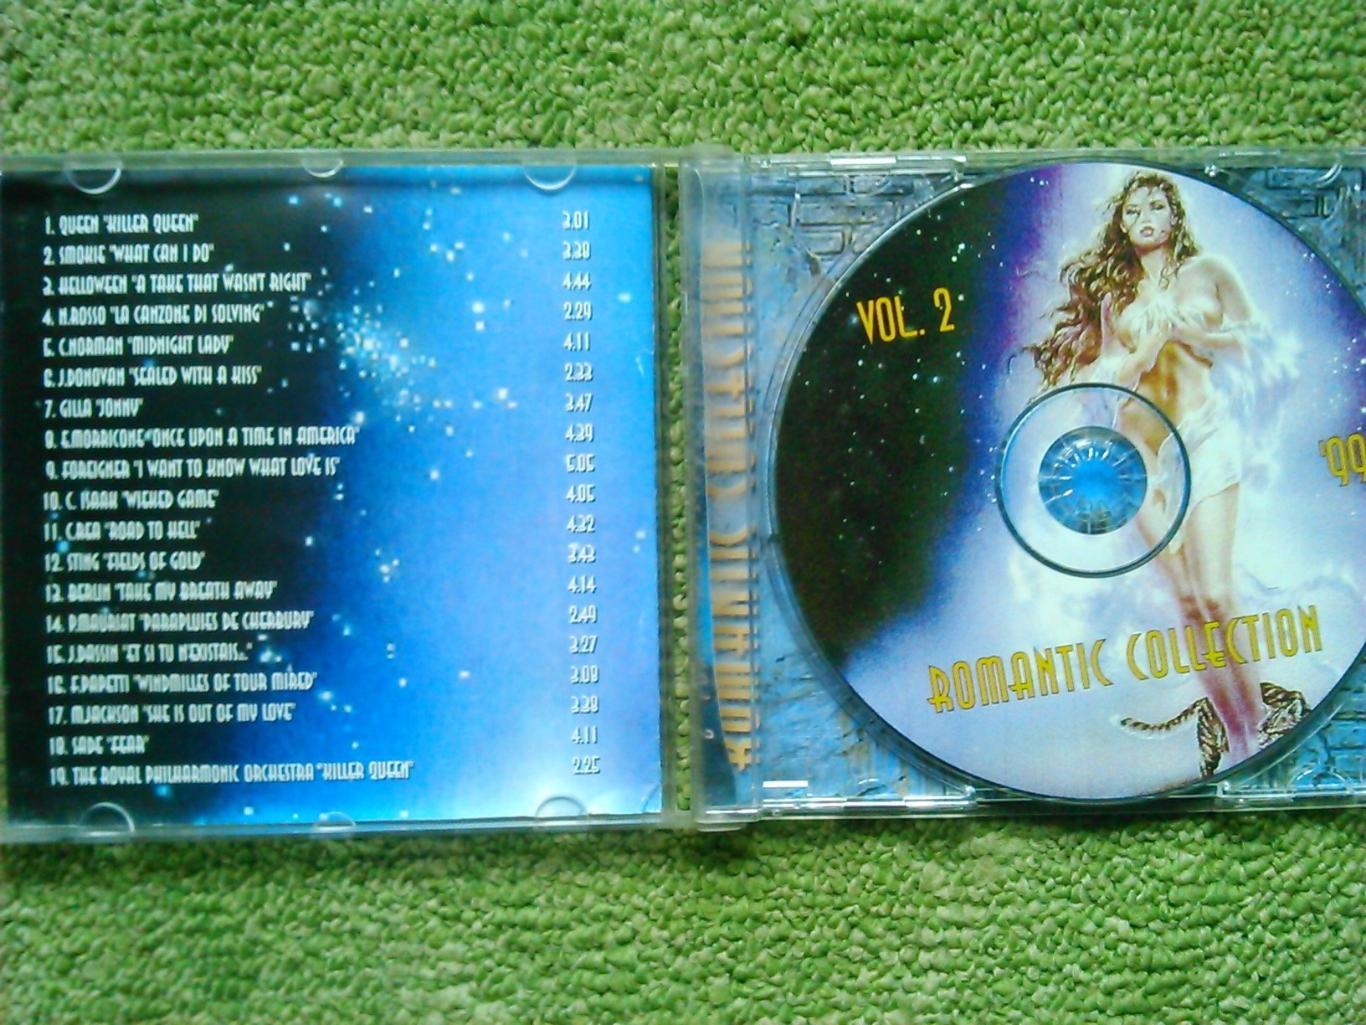 Audio CD ROMANTIC COLLECTION99.Vol 2. Оптом скидки до 50%! 1